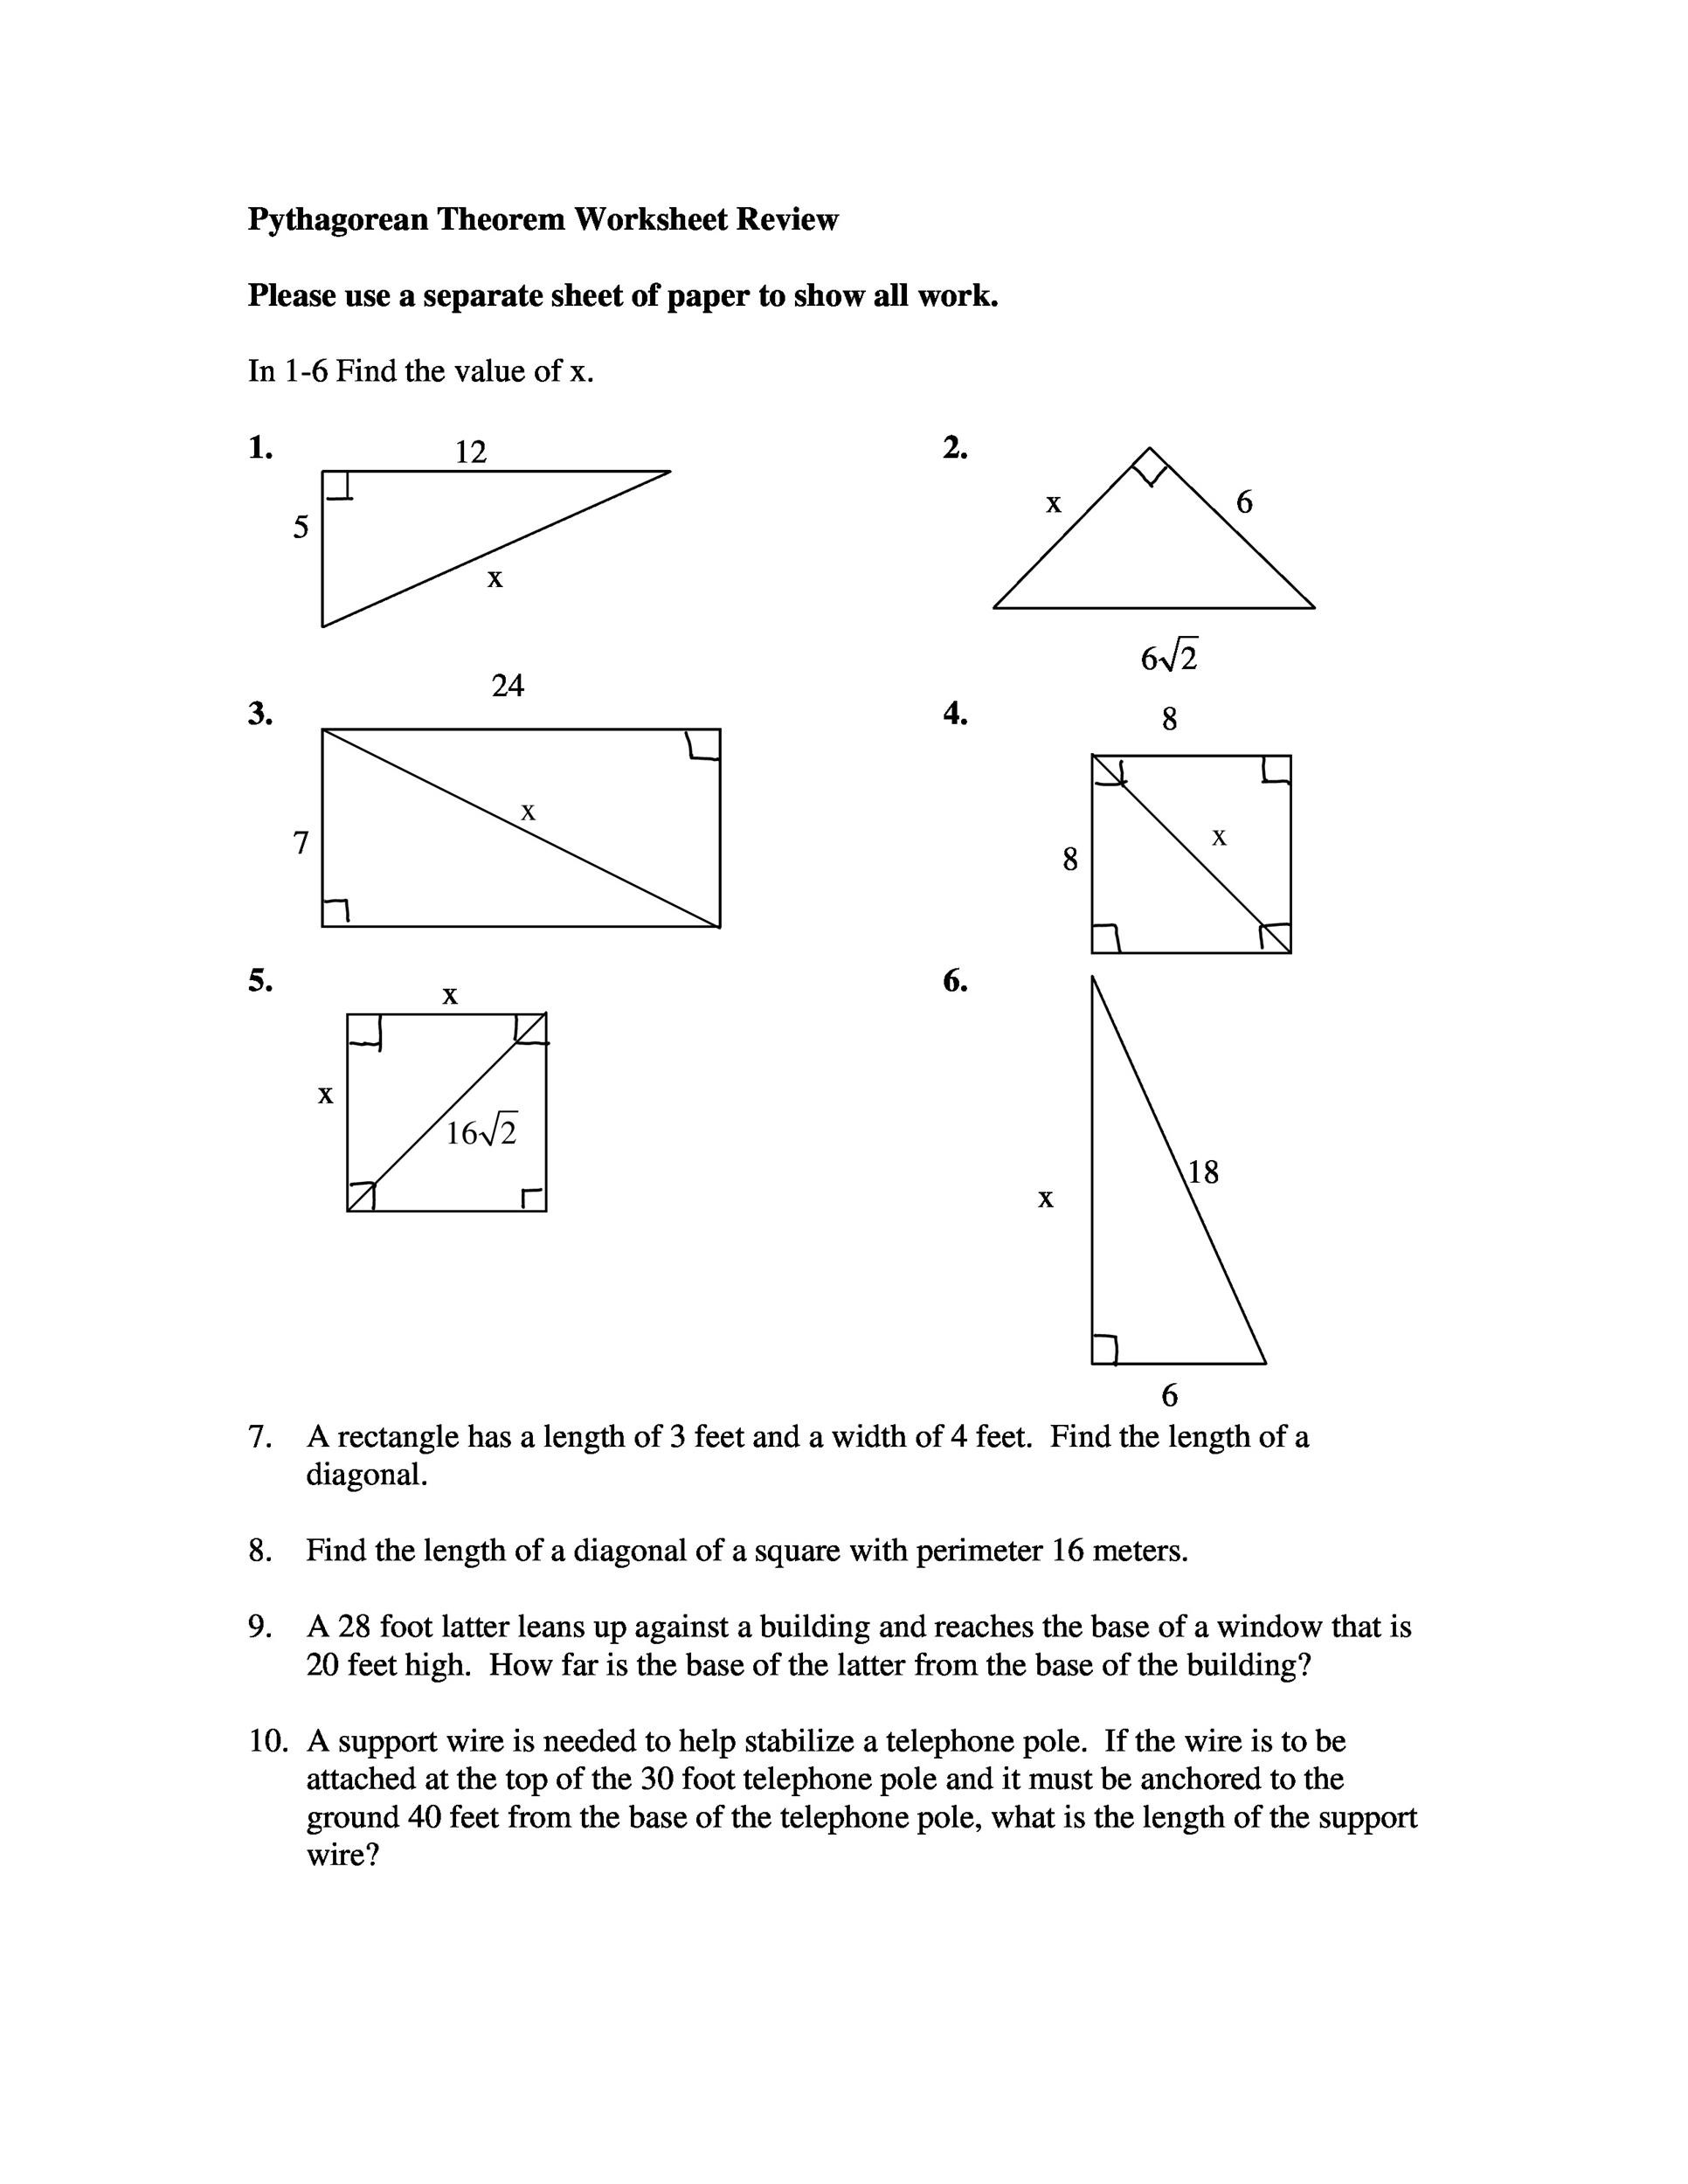 Pythagorean theorem Word Problems Worksheet 48 Pythagorean theorem Worksheet with Answers [word Pdf]